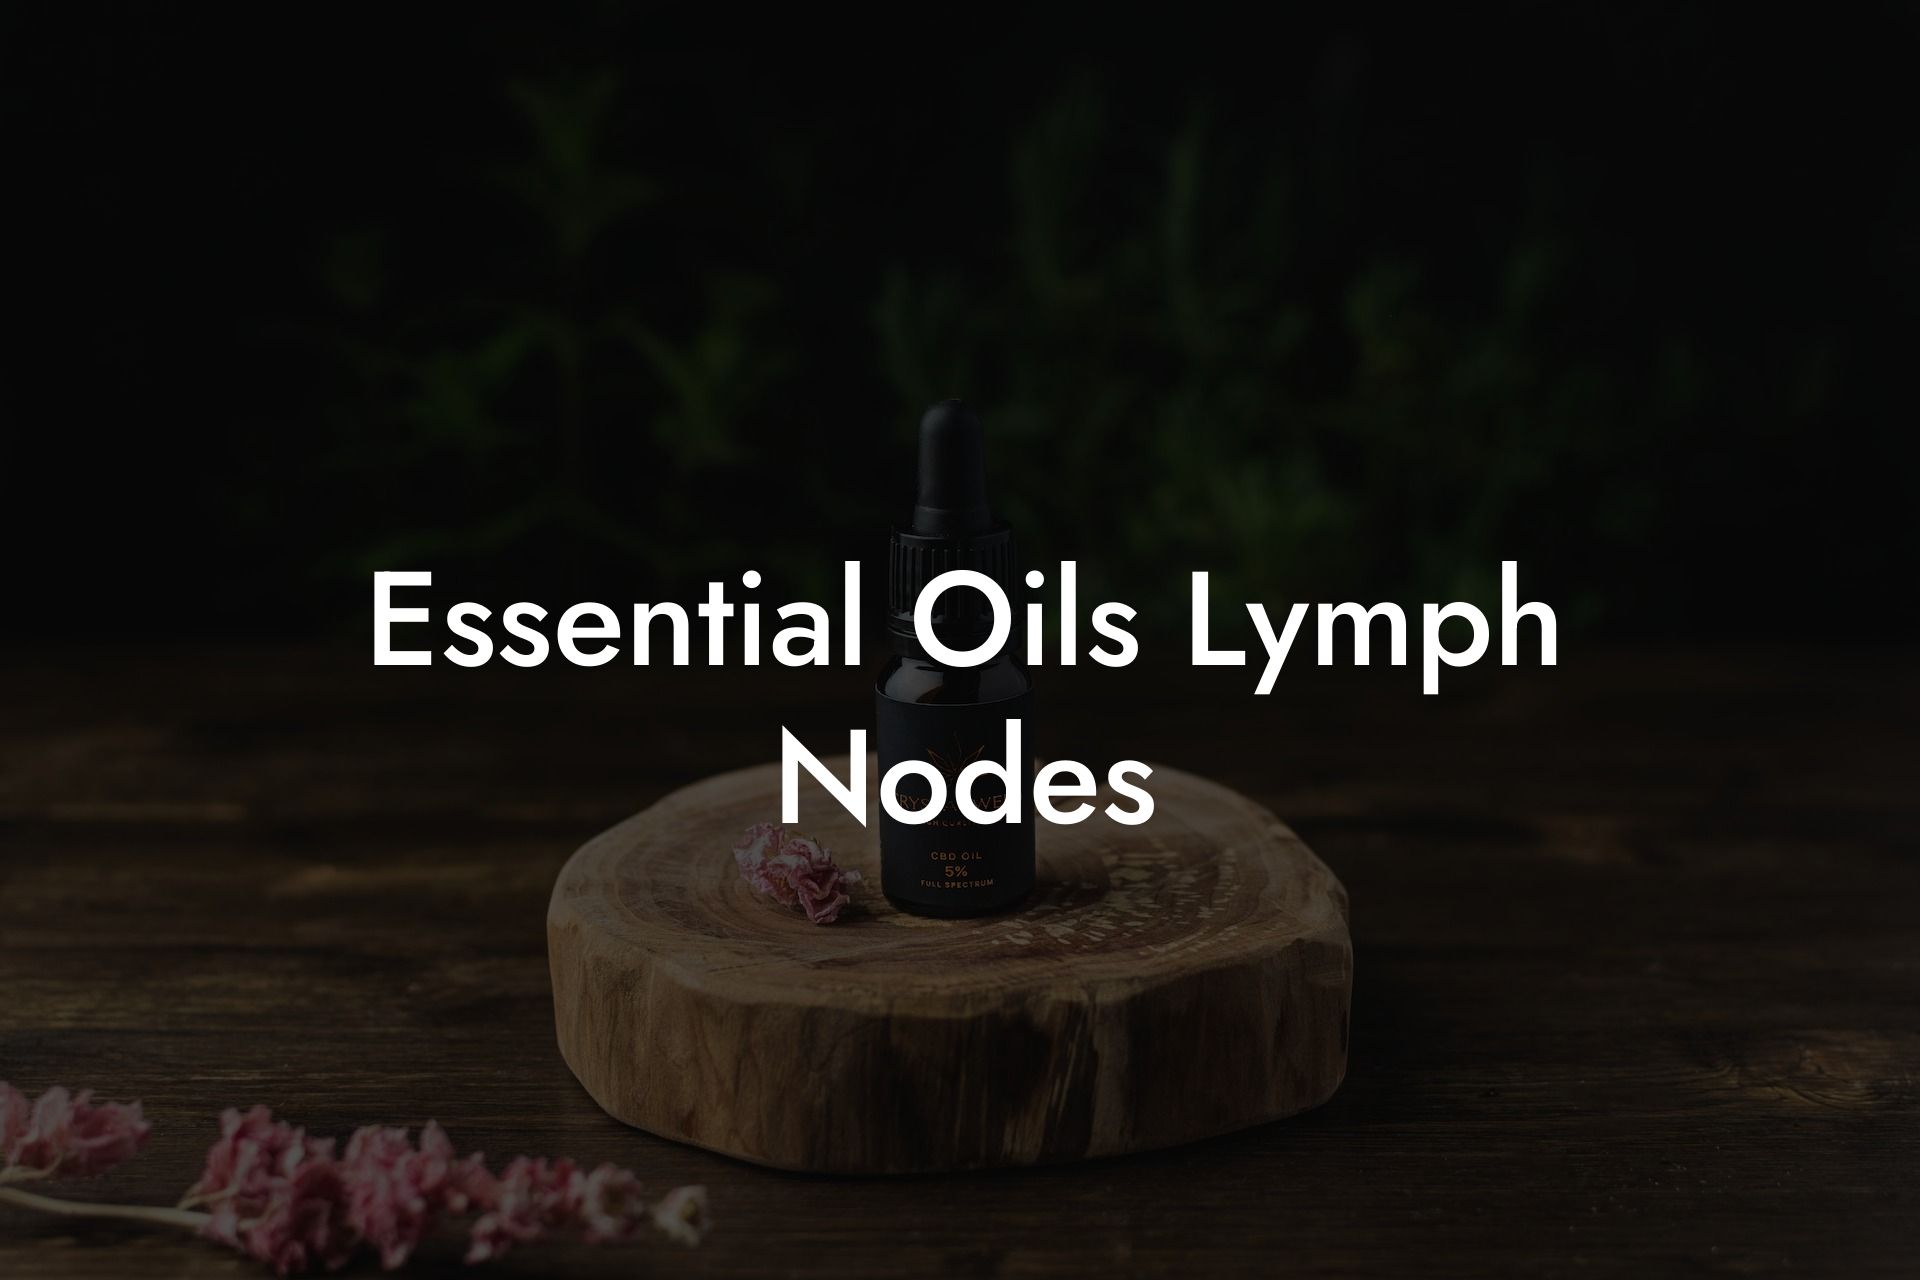 Essential Oils Lymph Nodes